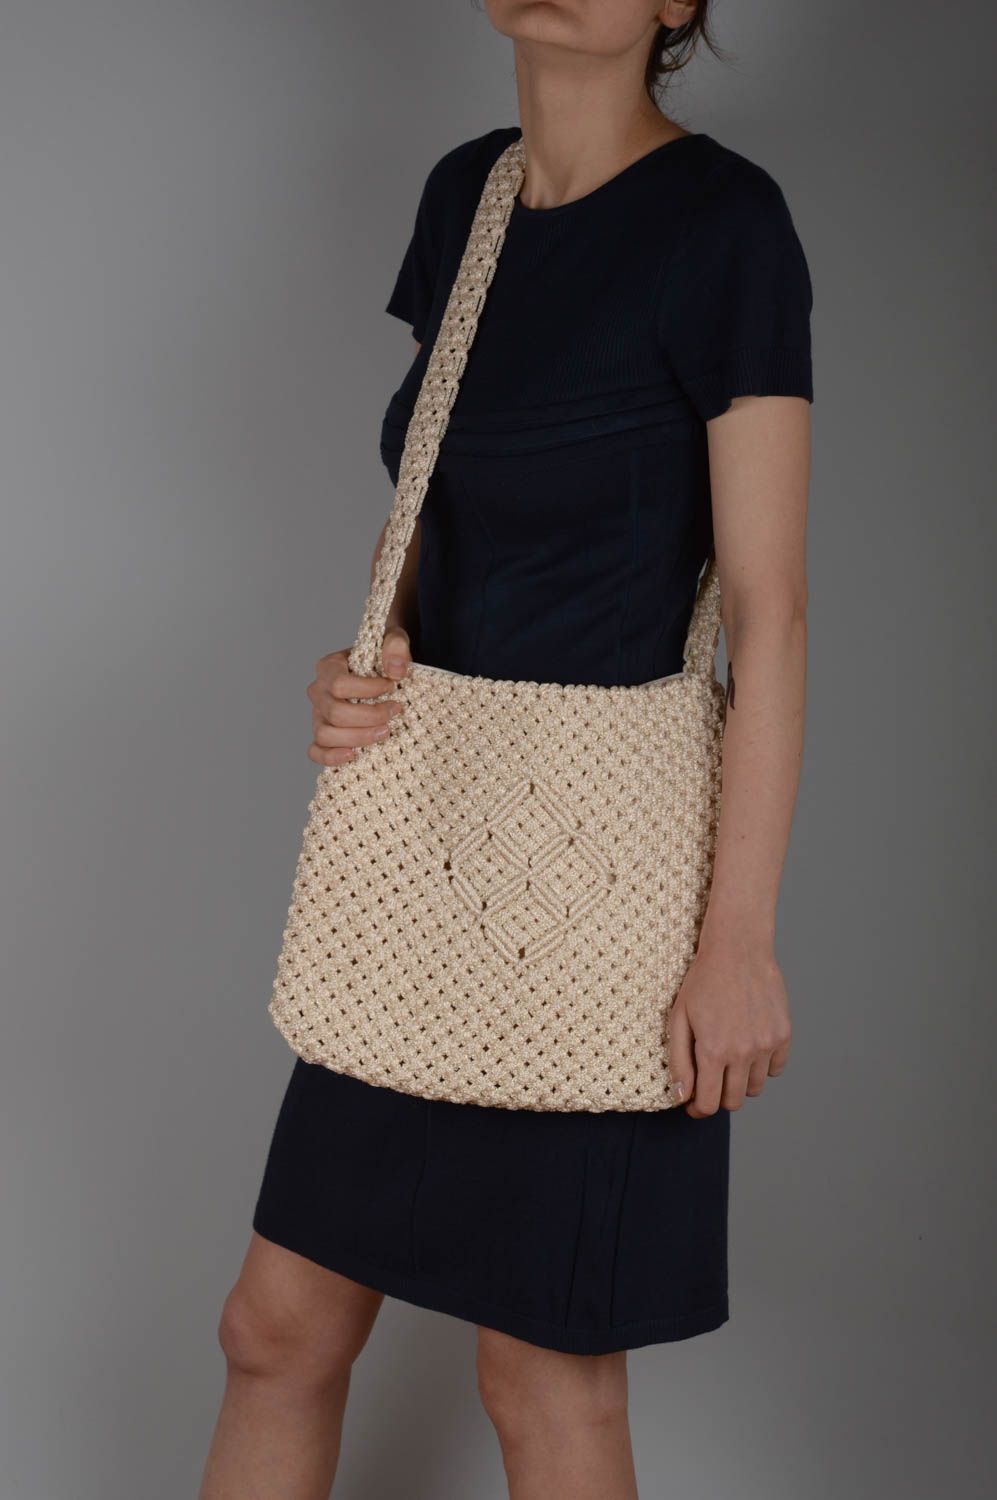 Handmade bag women purse macrame bag designer accessories gift ideas for women photo 5